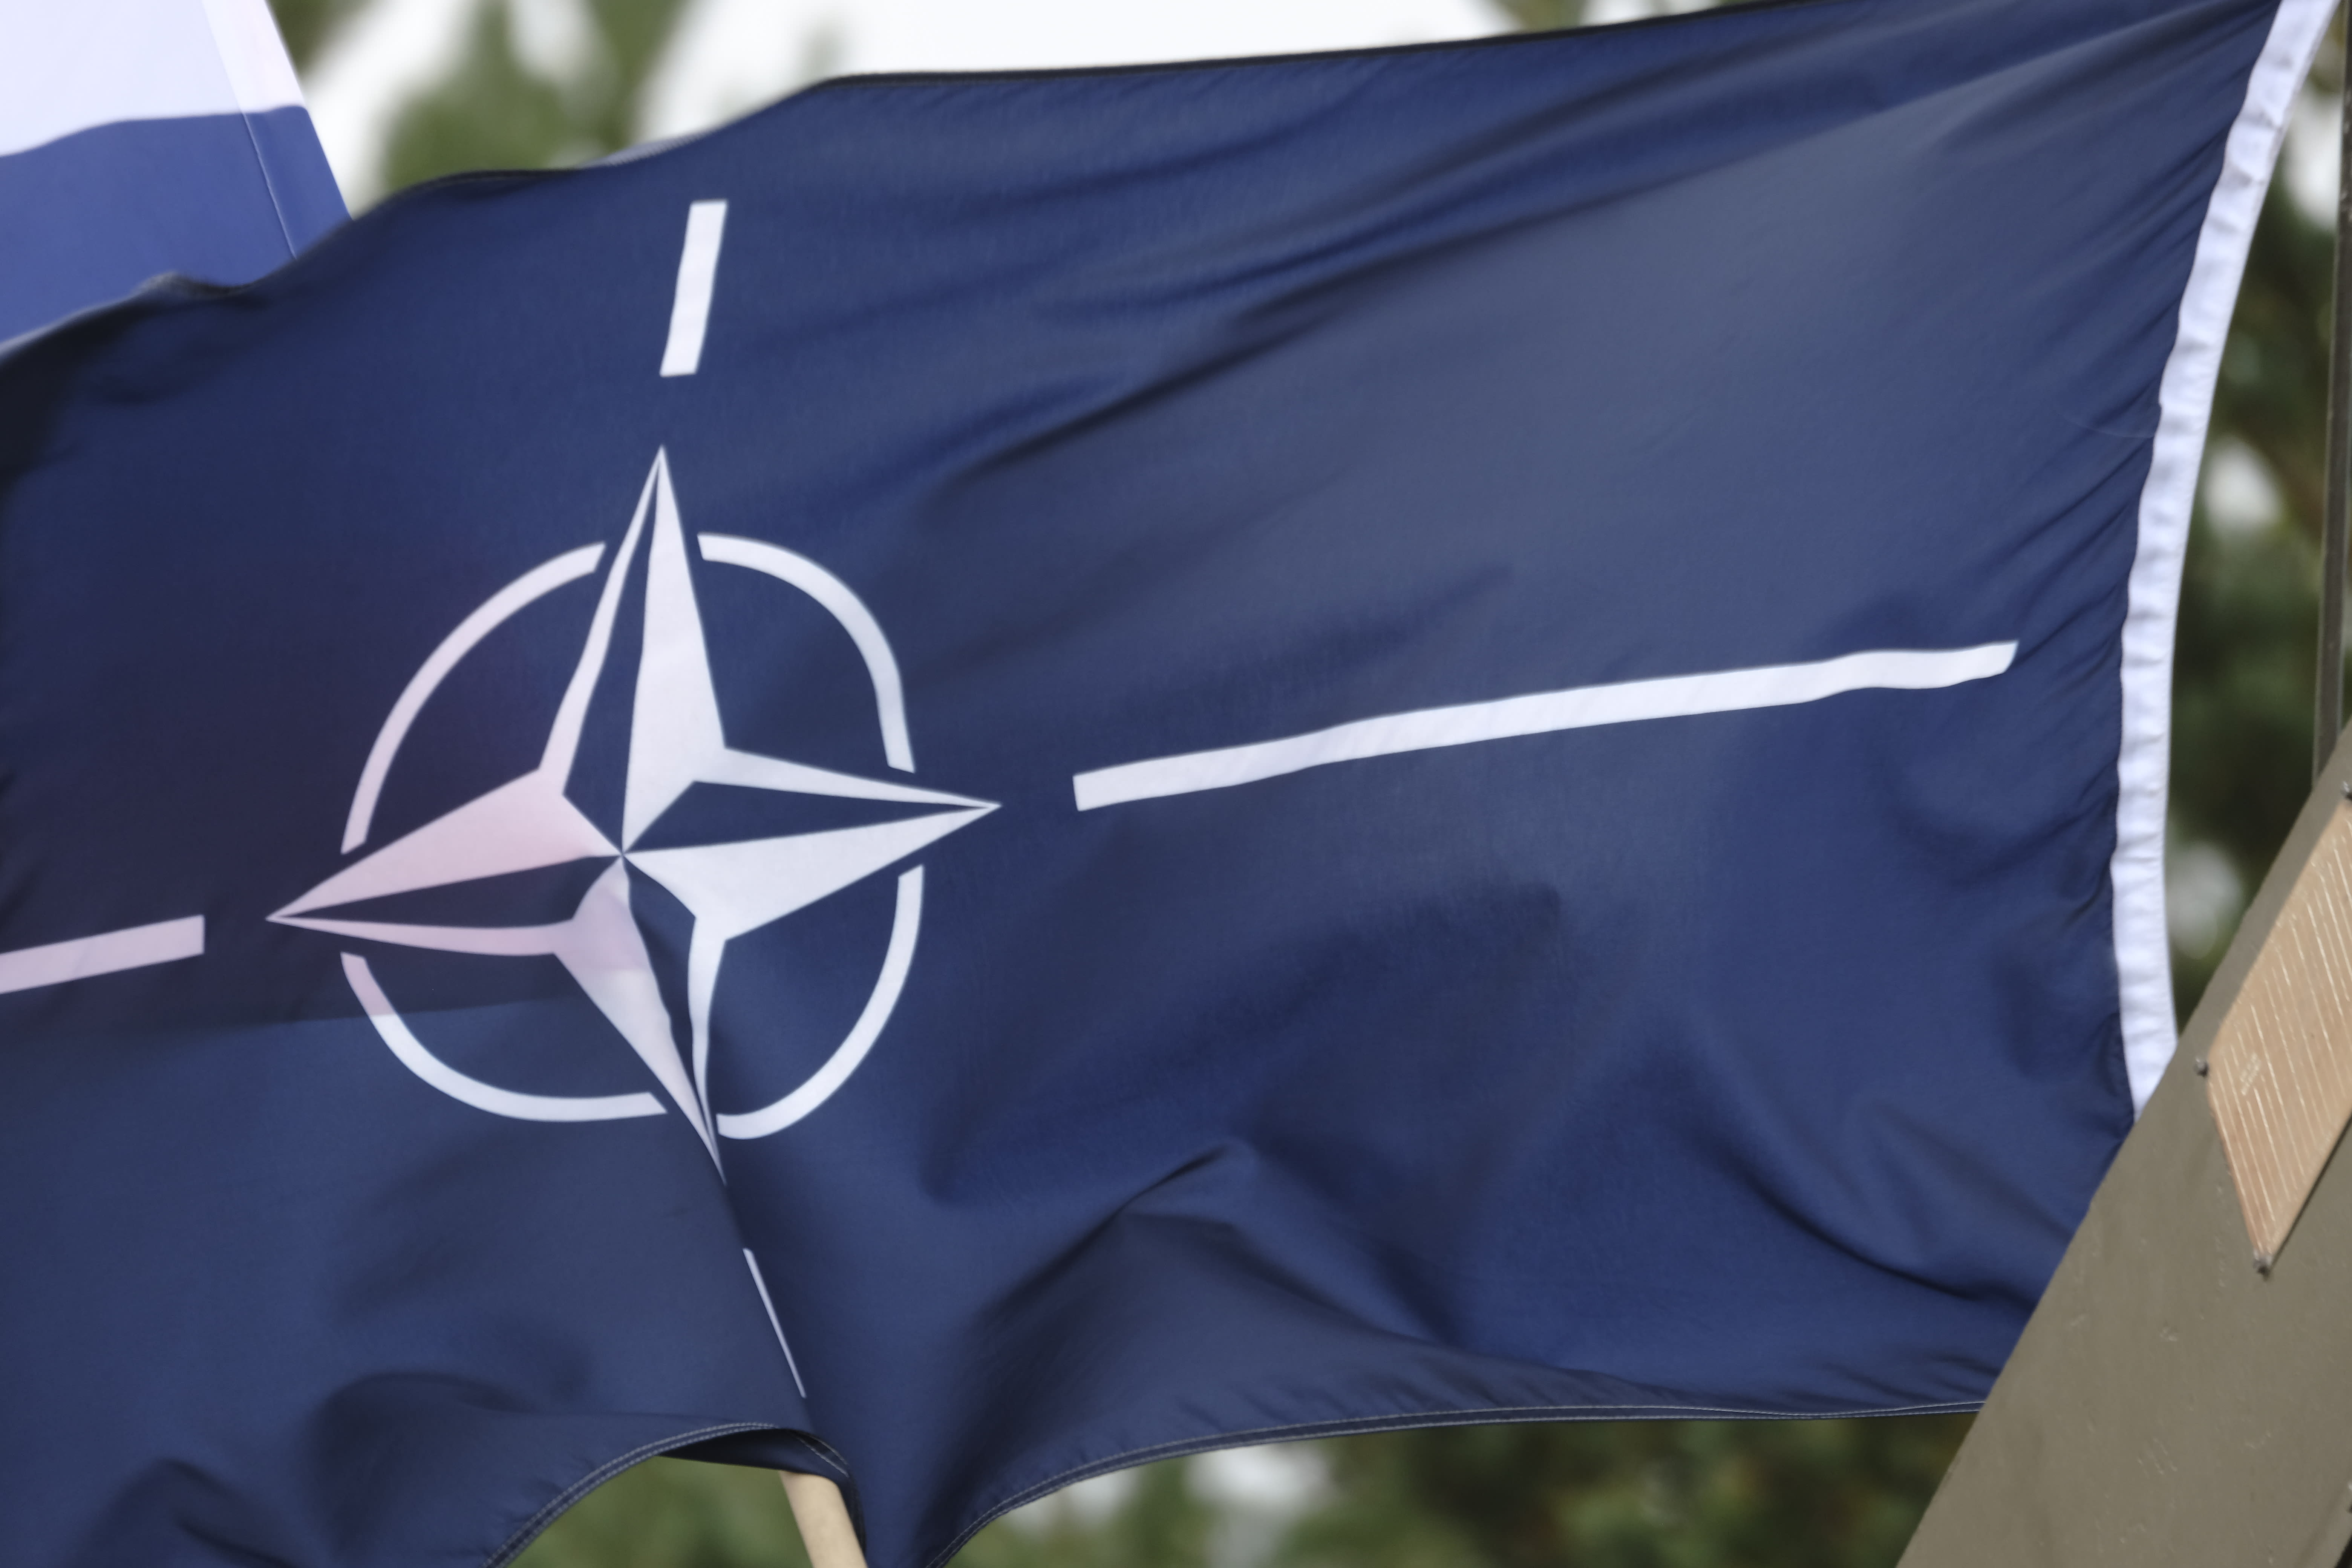 NATO’s second citizens’ initiative achieves the required 50,000 signatures